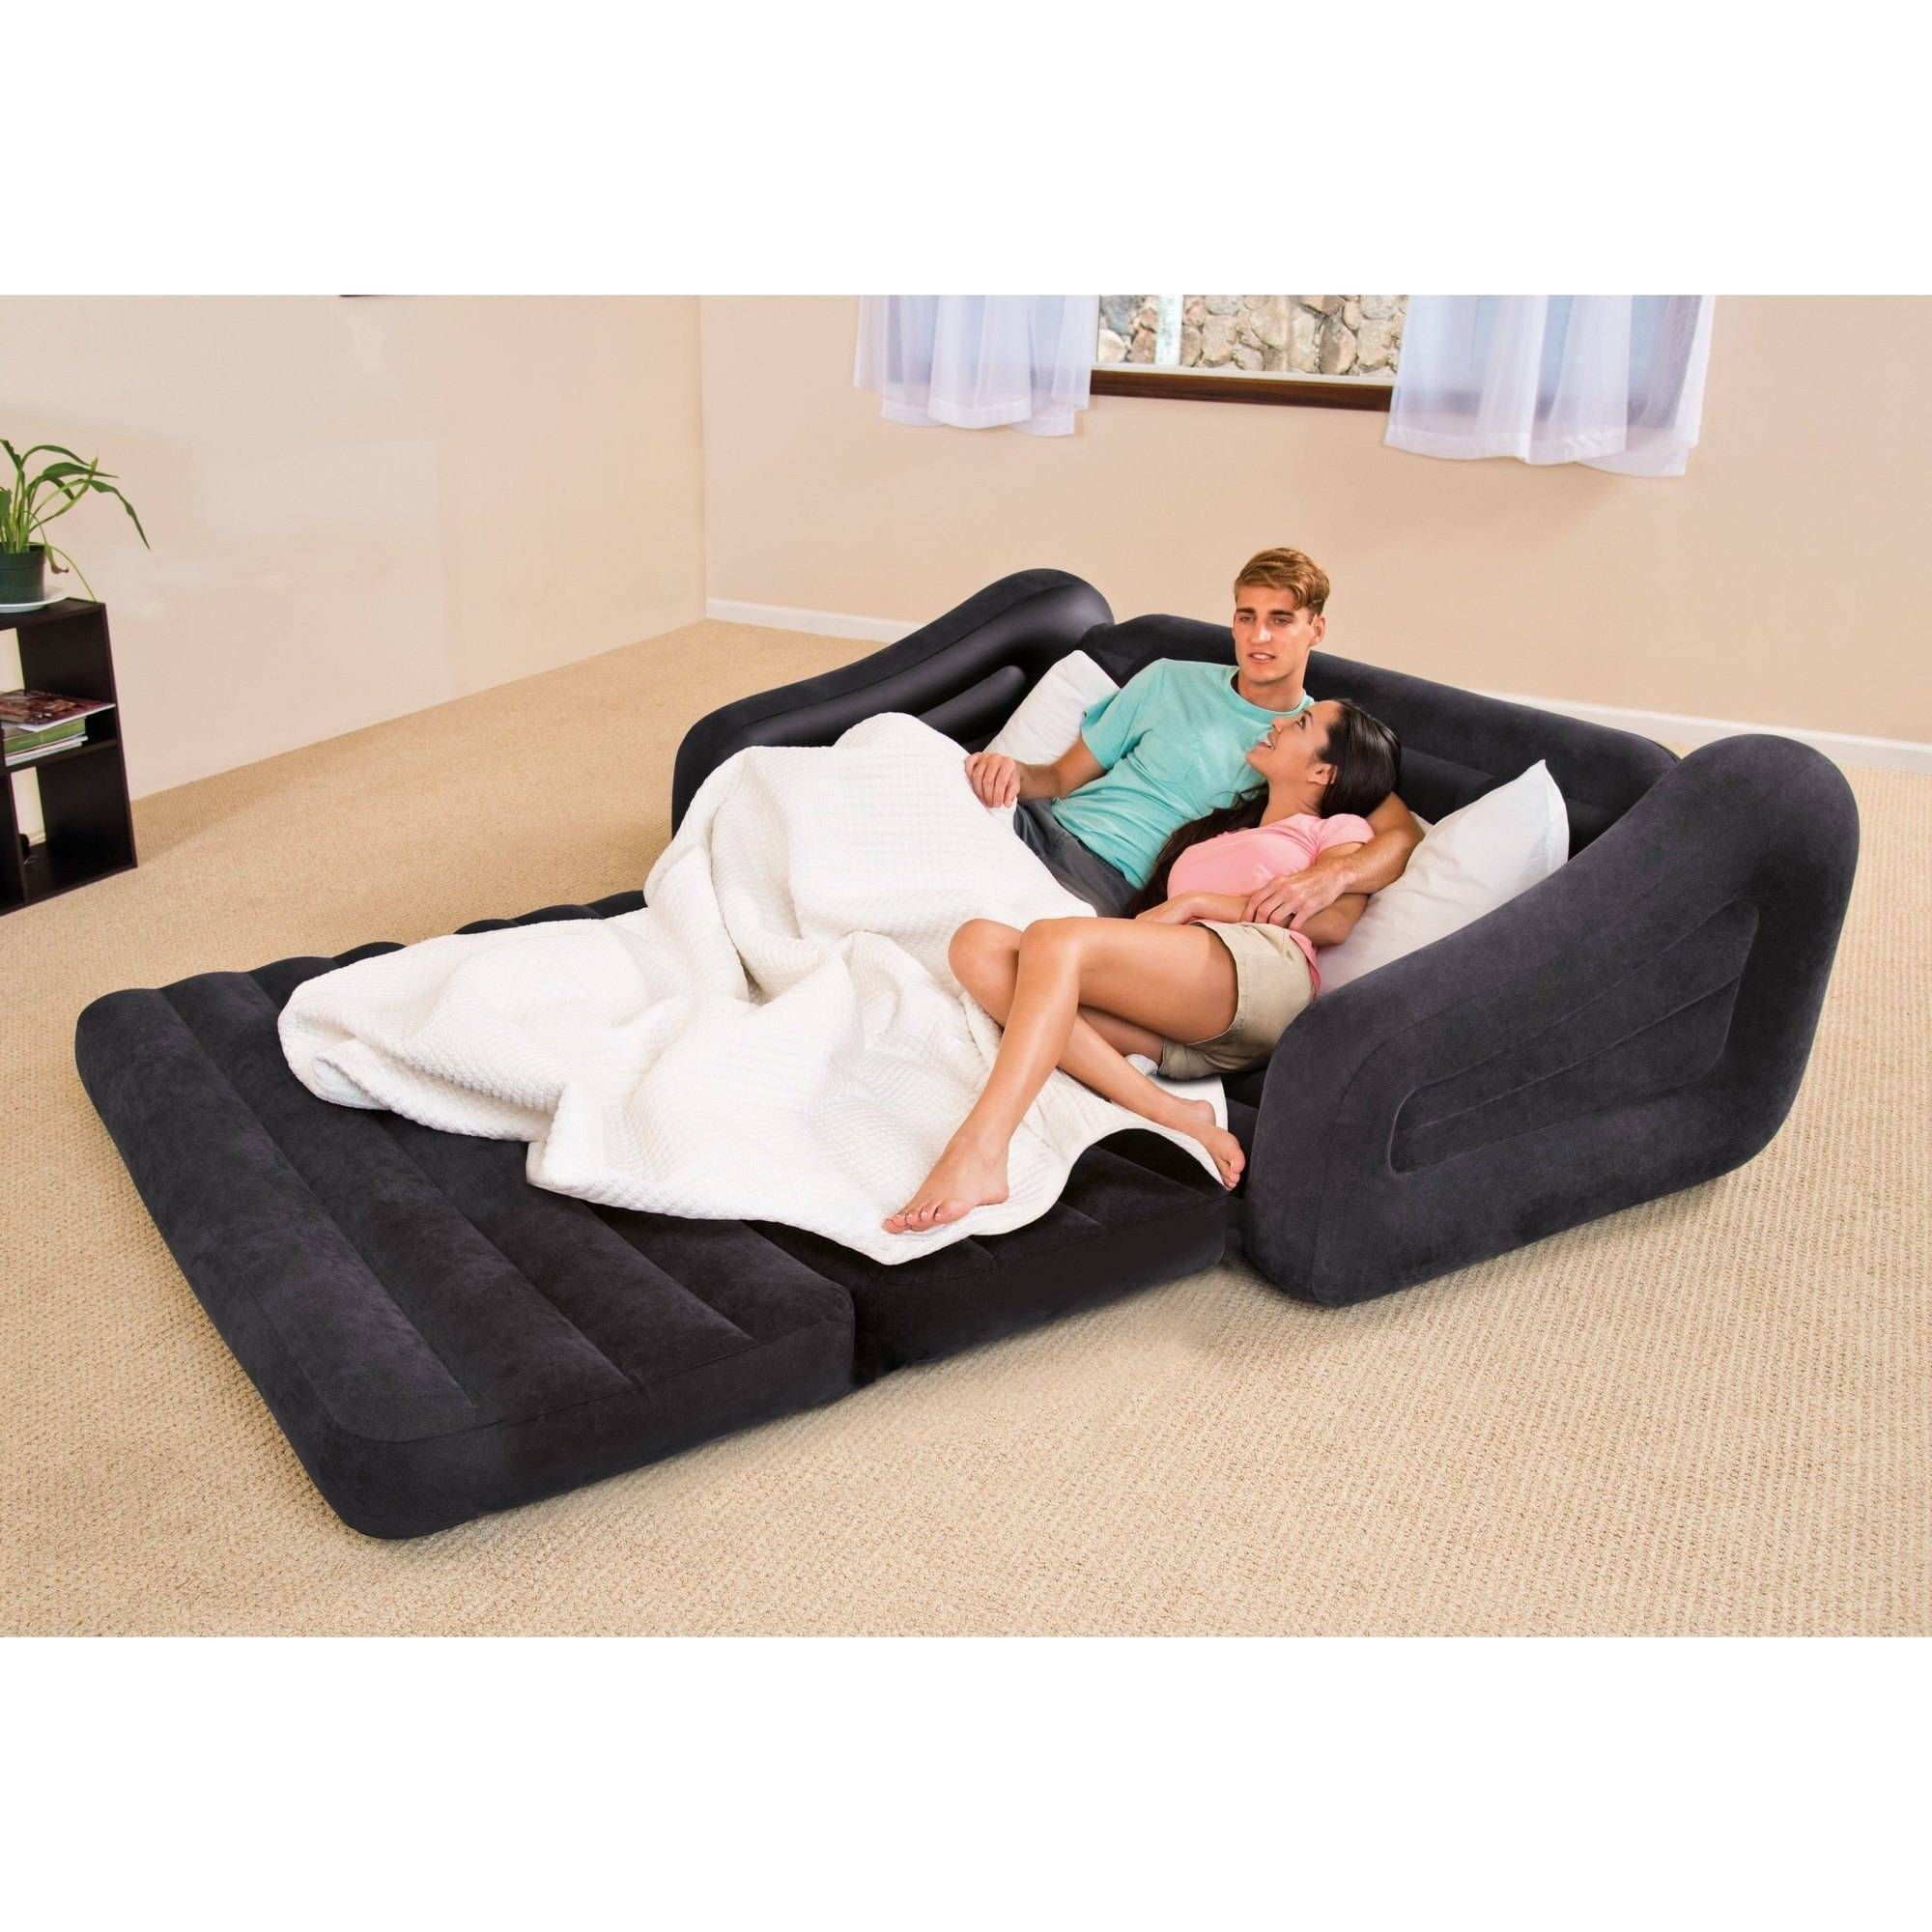 Mesmerizing Sleeper Sofas With Air Mattresses | Tsrieb In Intex Sleep Sofas (View 11 of 15)